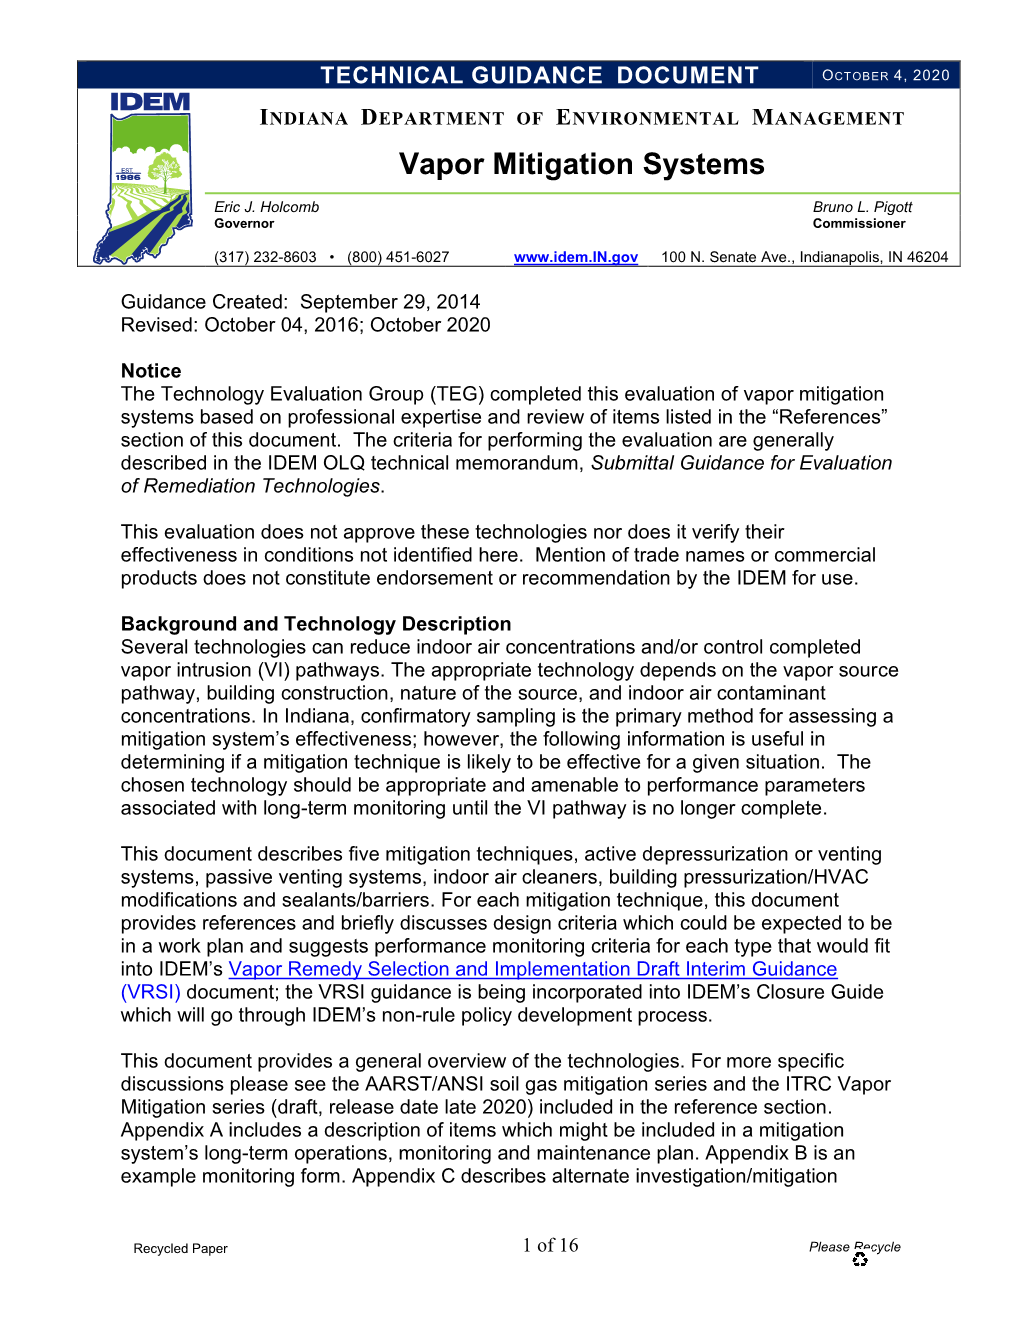 Vapor Mitigation Systems